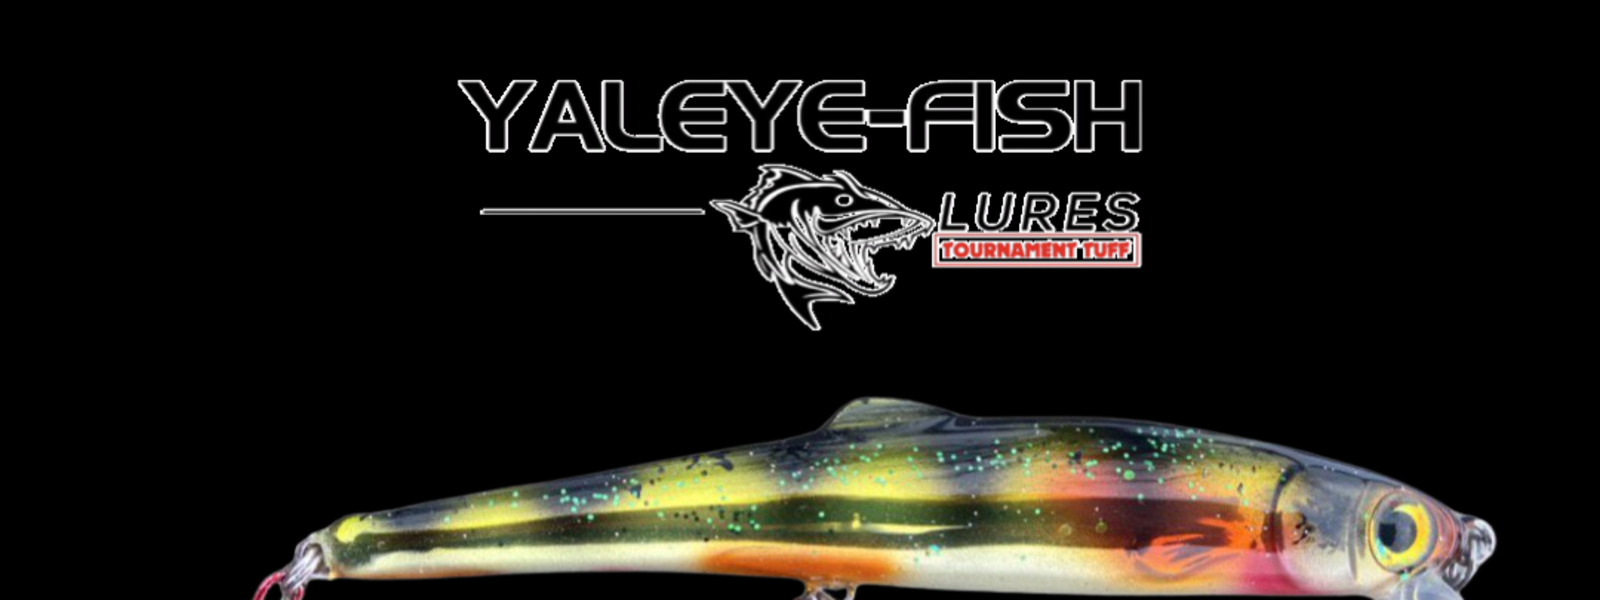 Home  Yaleye-Fish Lures, Tournament Tuff!